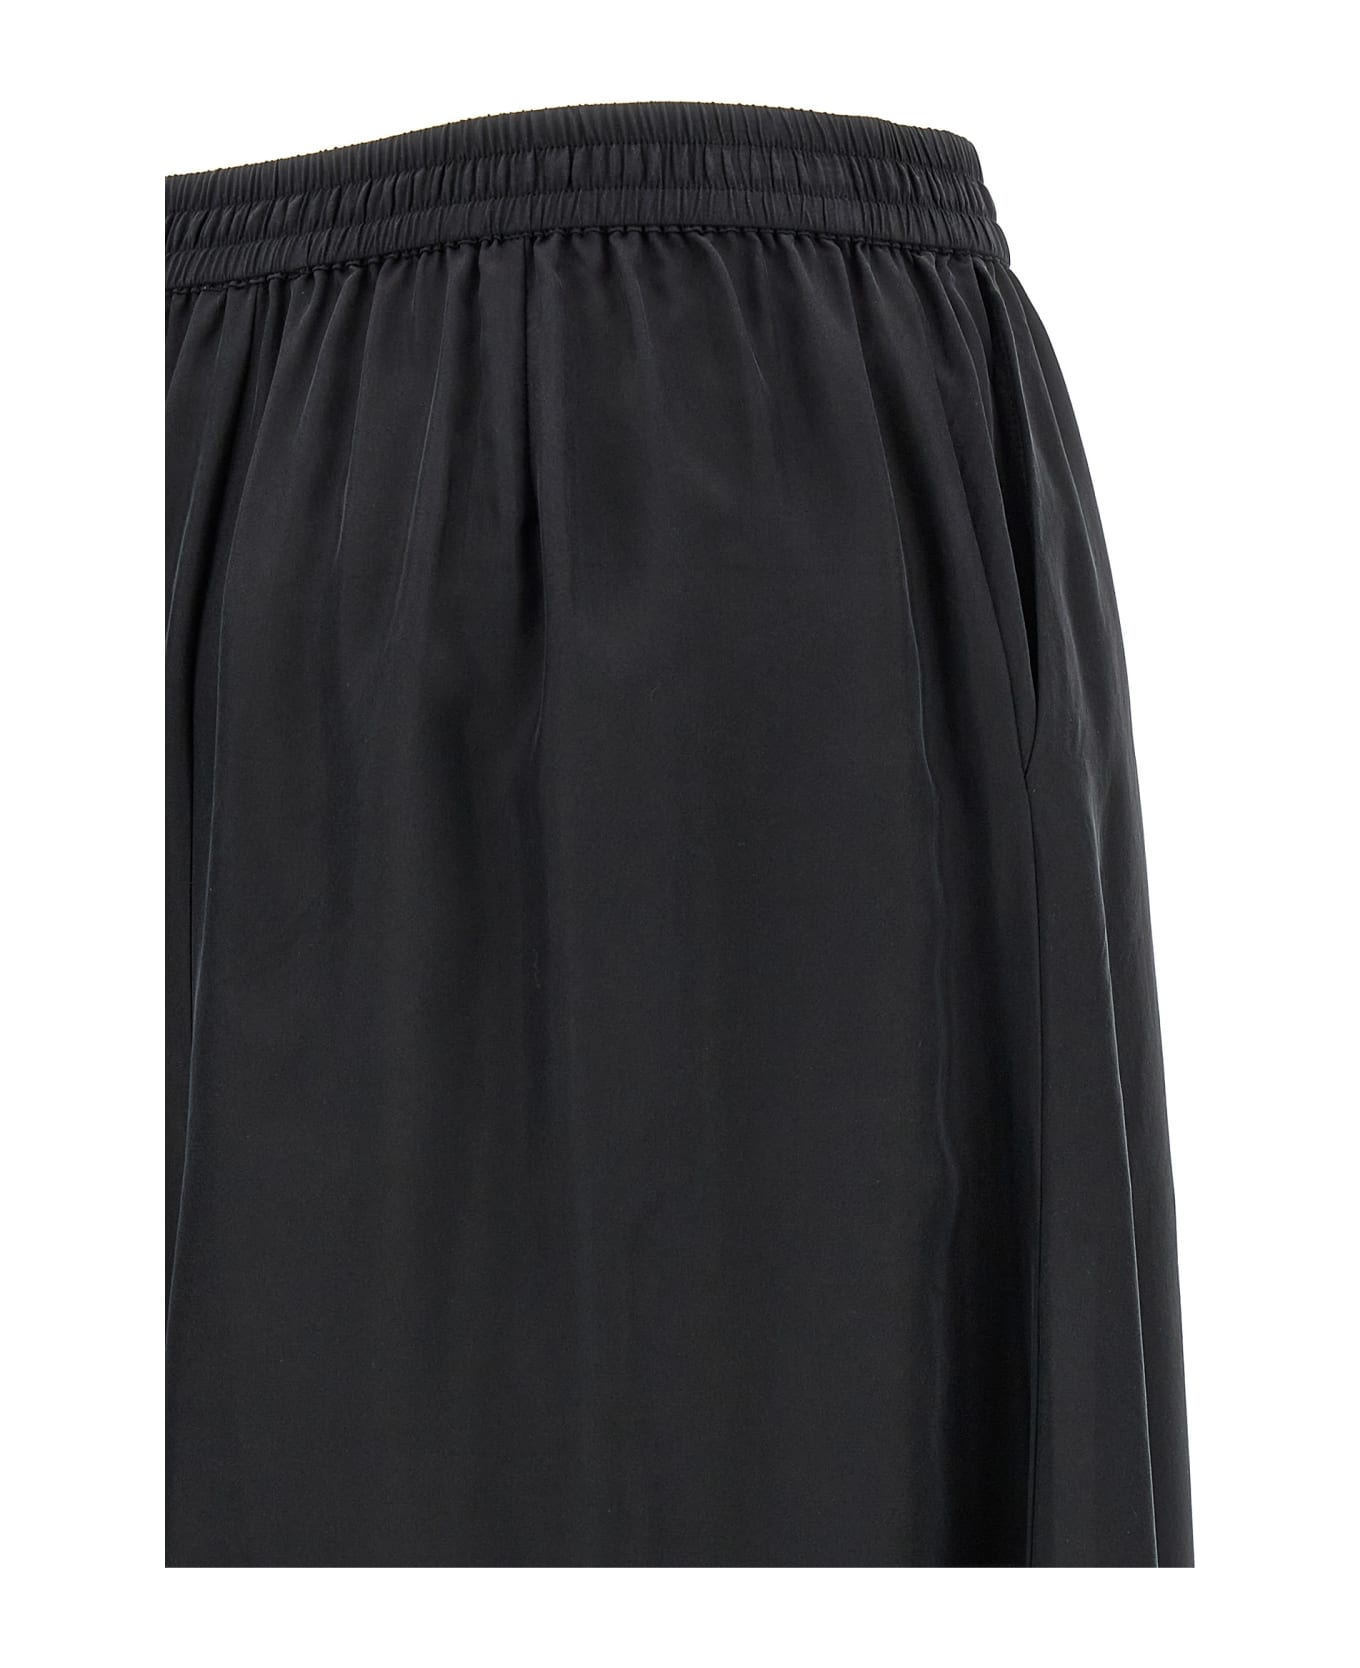 Parosh 'sunny' Skirt - Black   スカート